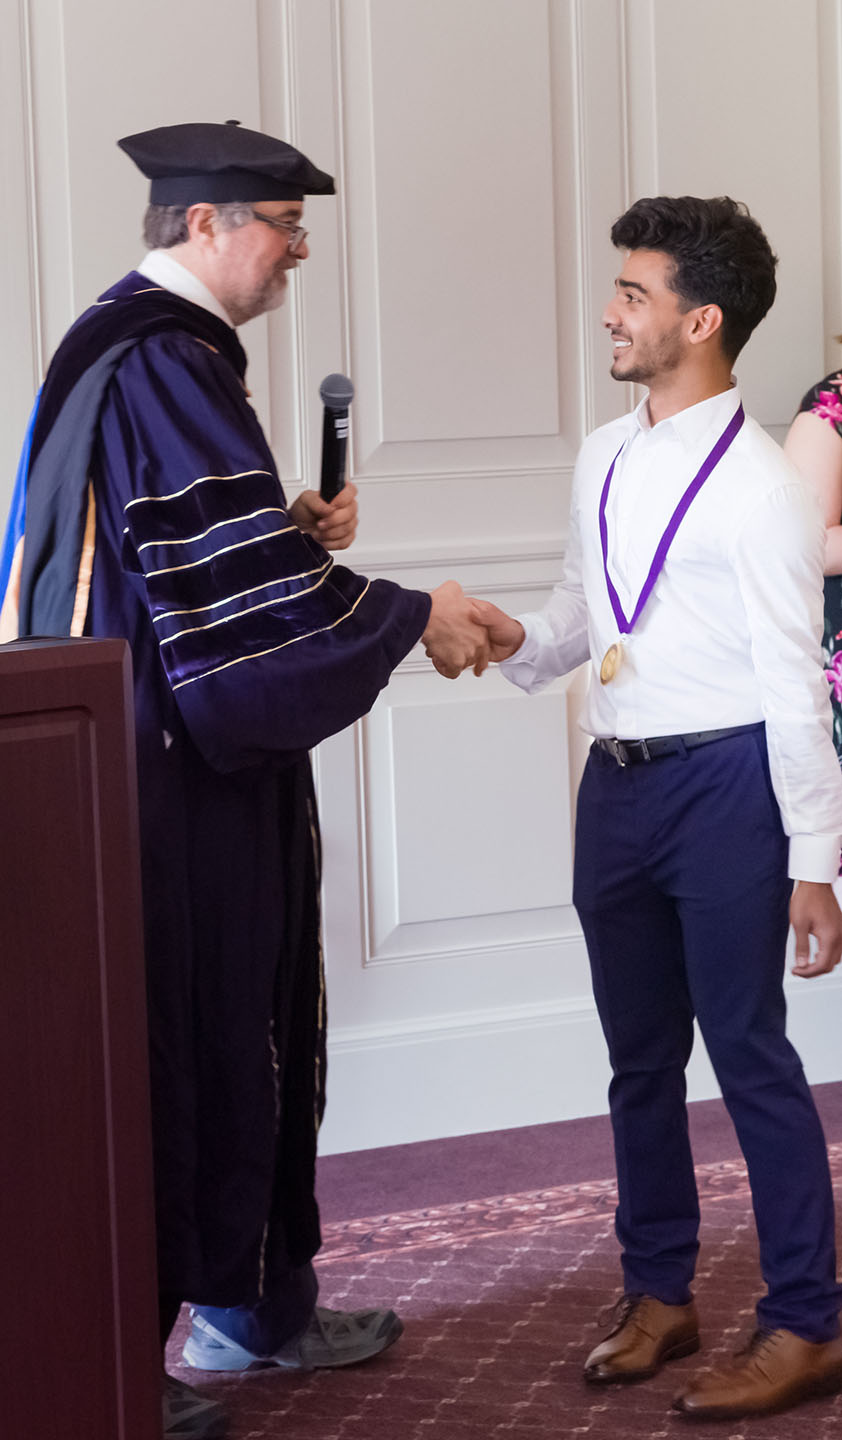 Professor and graduate shaking hands